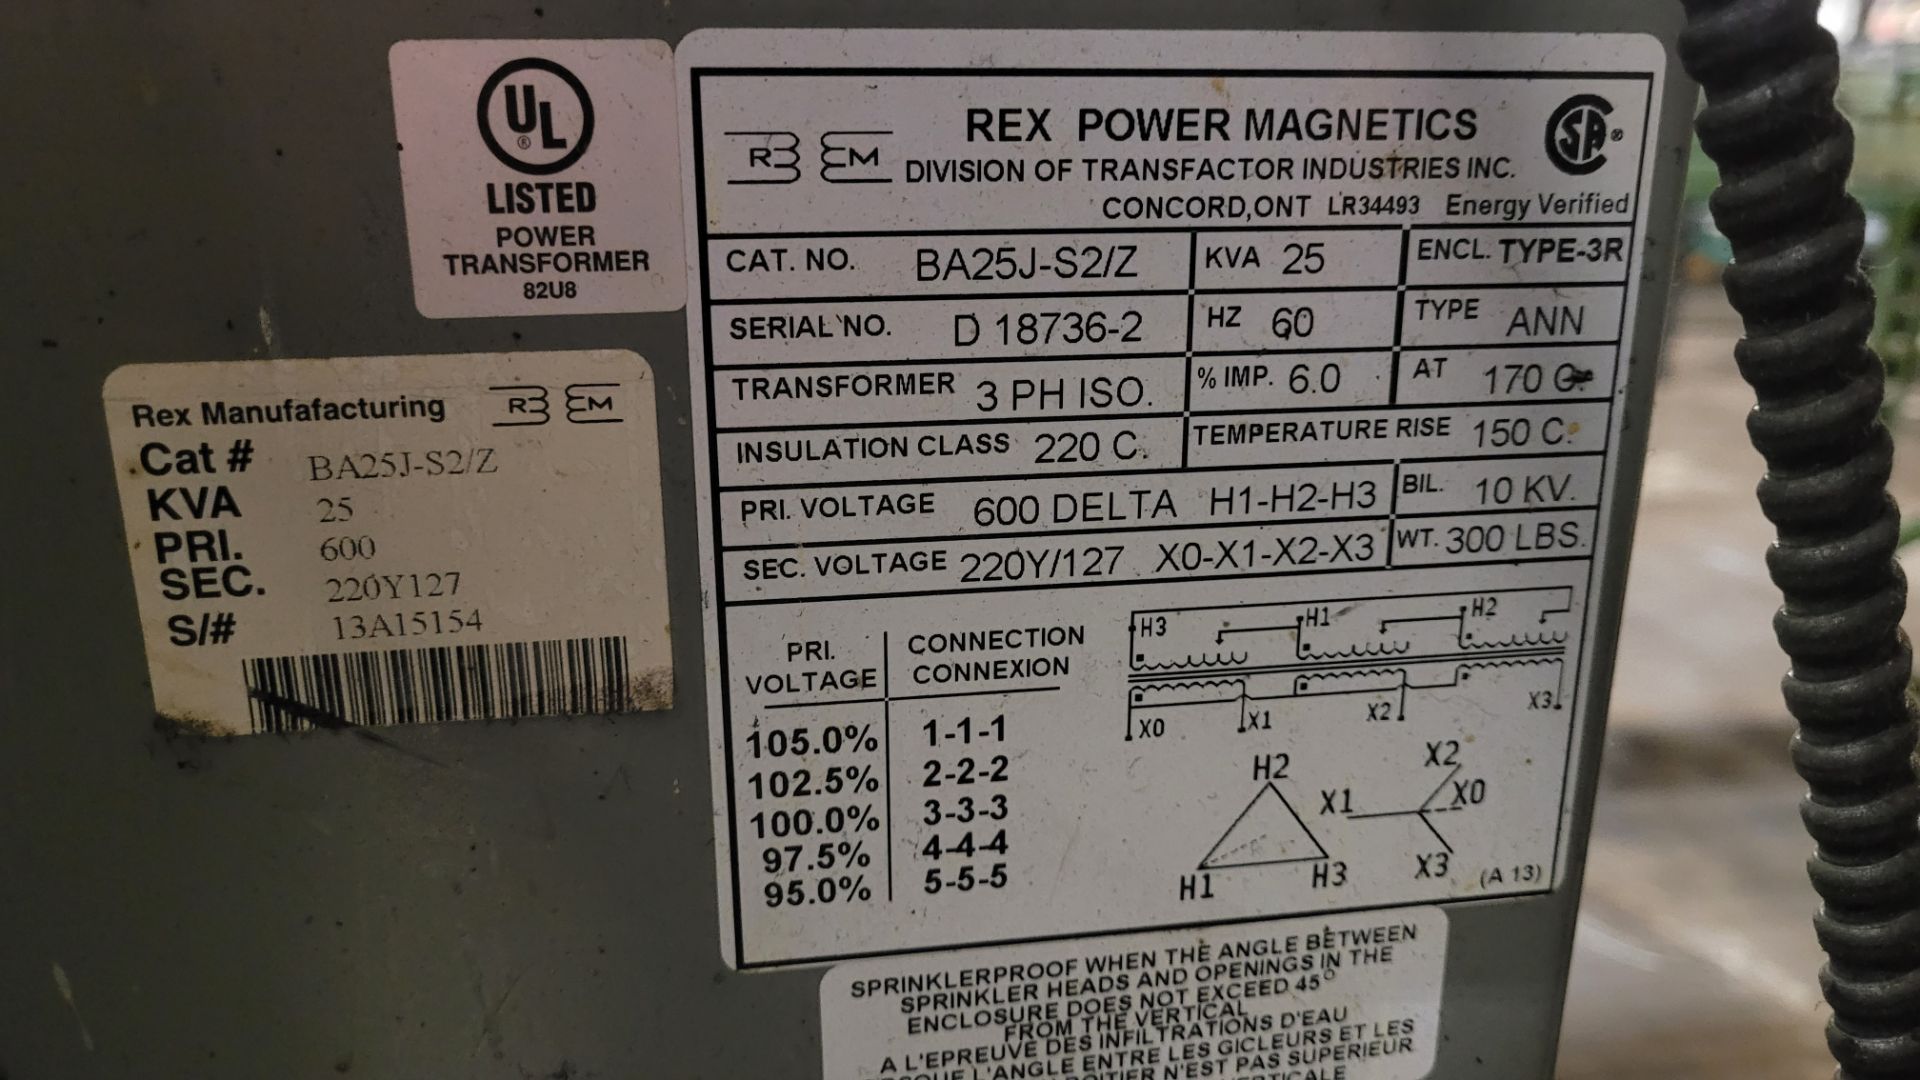 REX POWER MAGNETICS 25KVA TRANSFORMER, 600V PRIMARY, 220Y/127 SECONDARY (RIGGING FEE $75) - Image 3 of 3